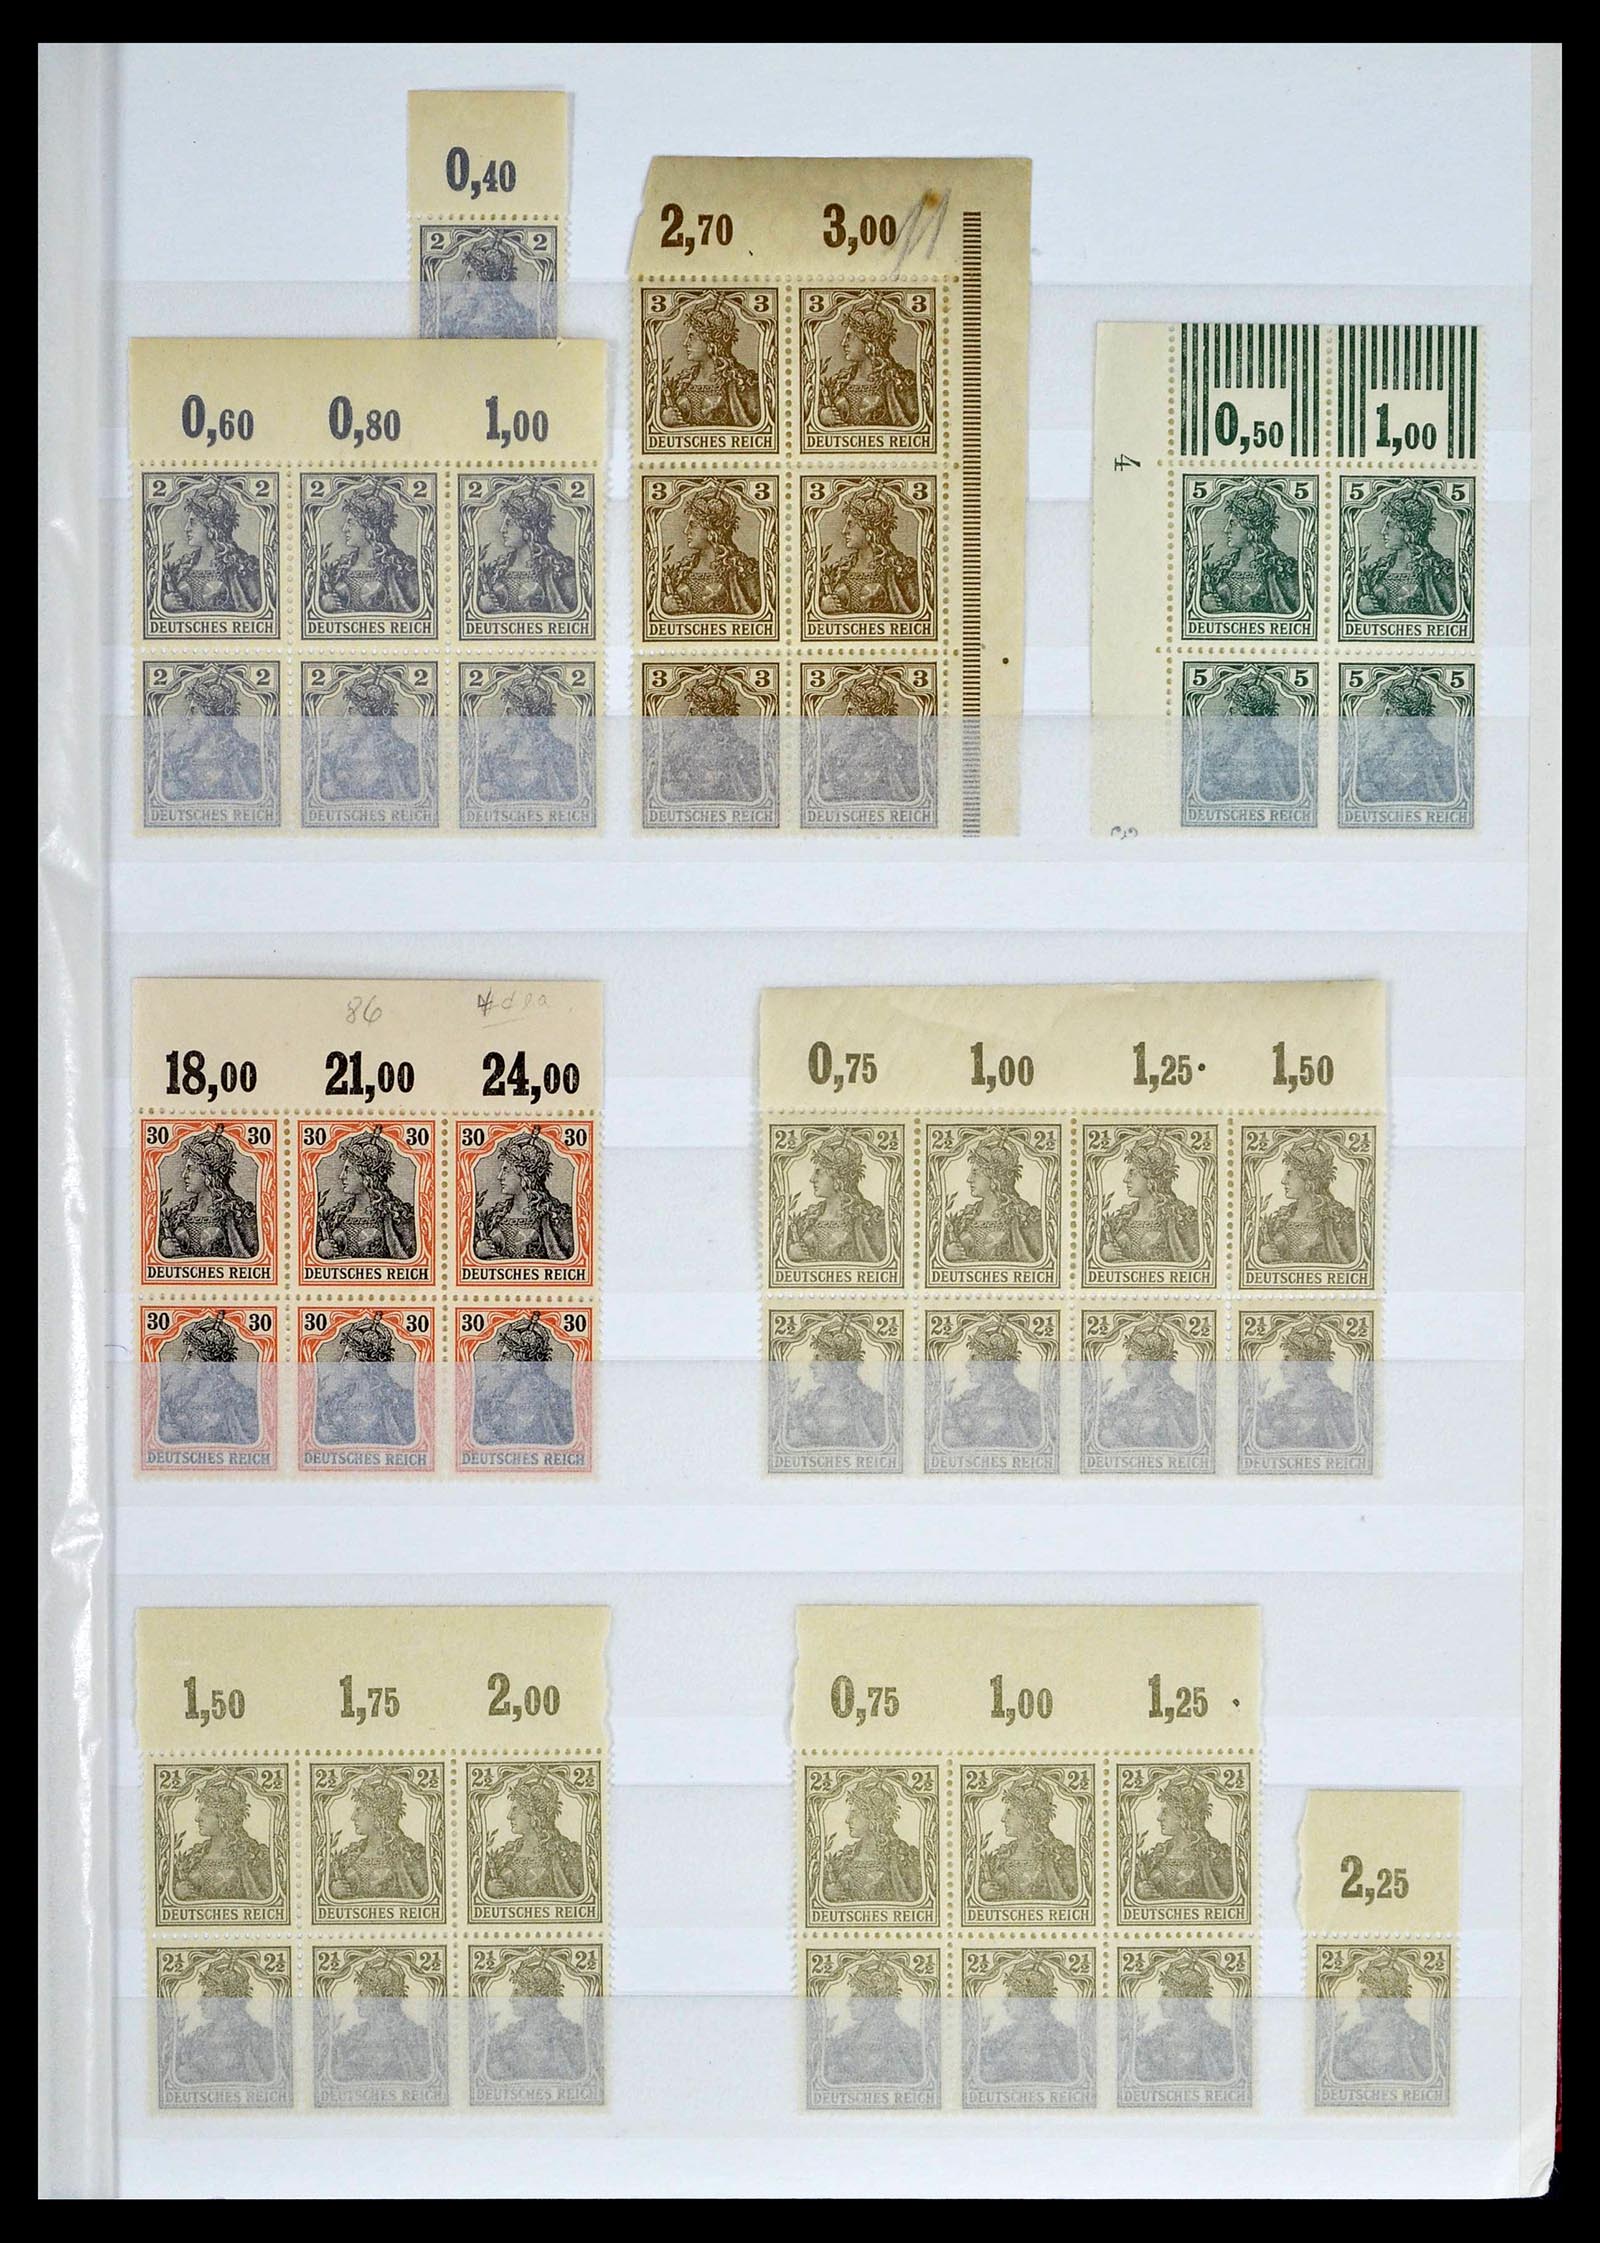 39254 0003 - Stamp collection 39254 German Reich MNH top margins.